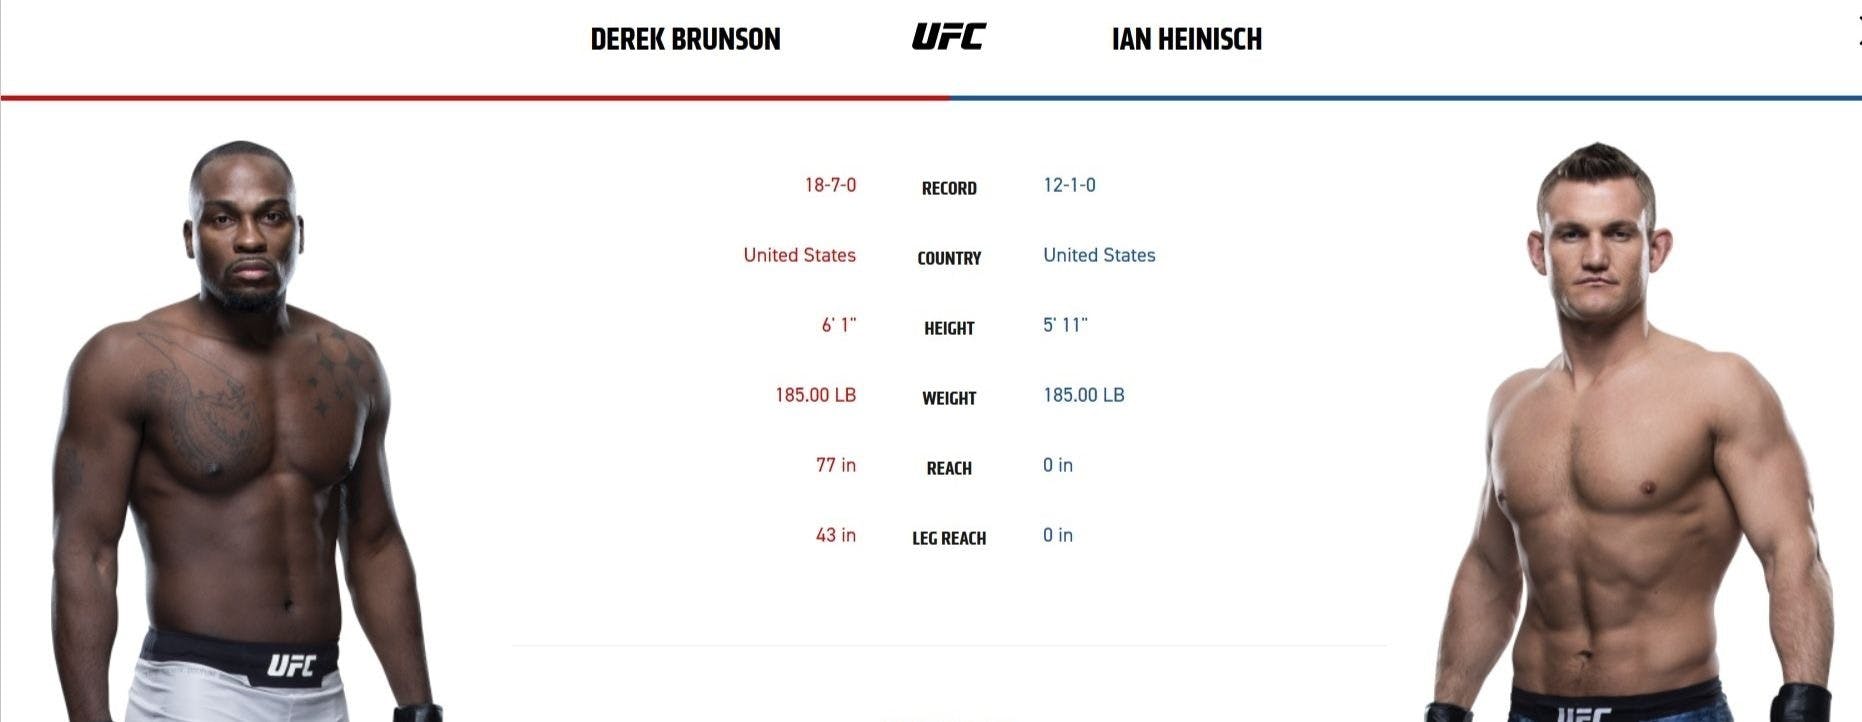 Derek Brunson vs Ian Heinisch UFC 241